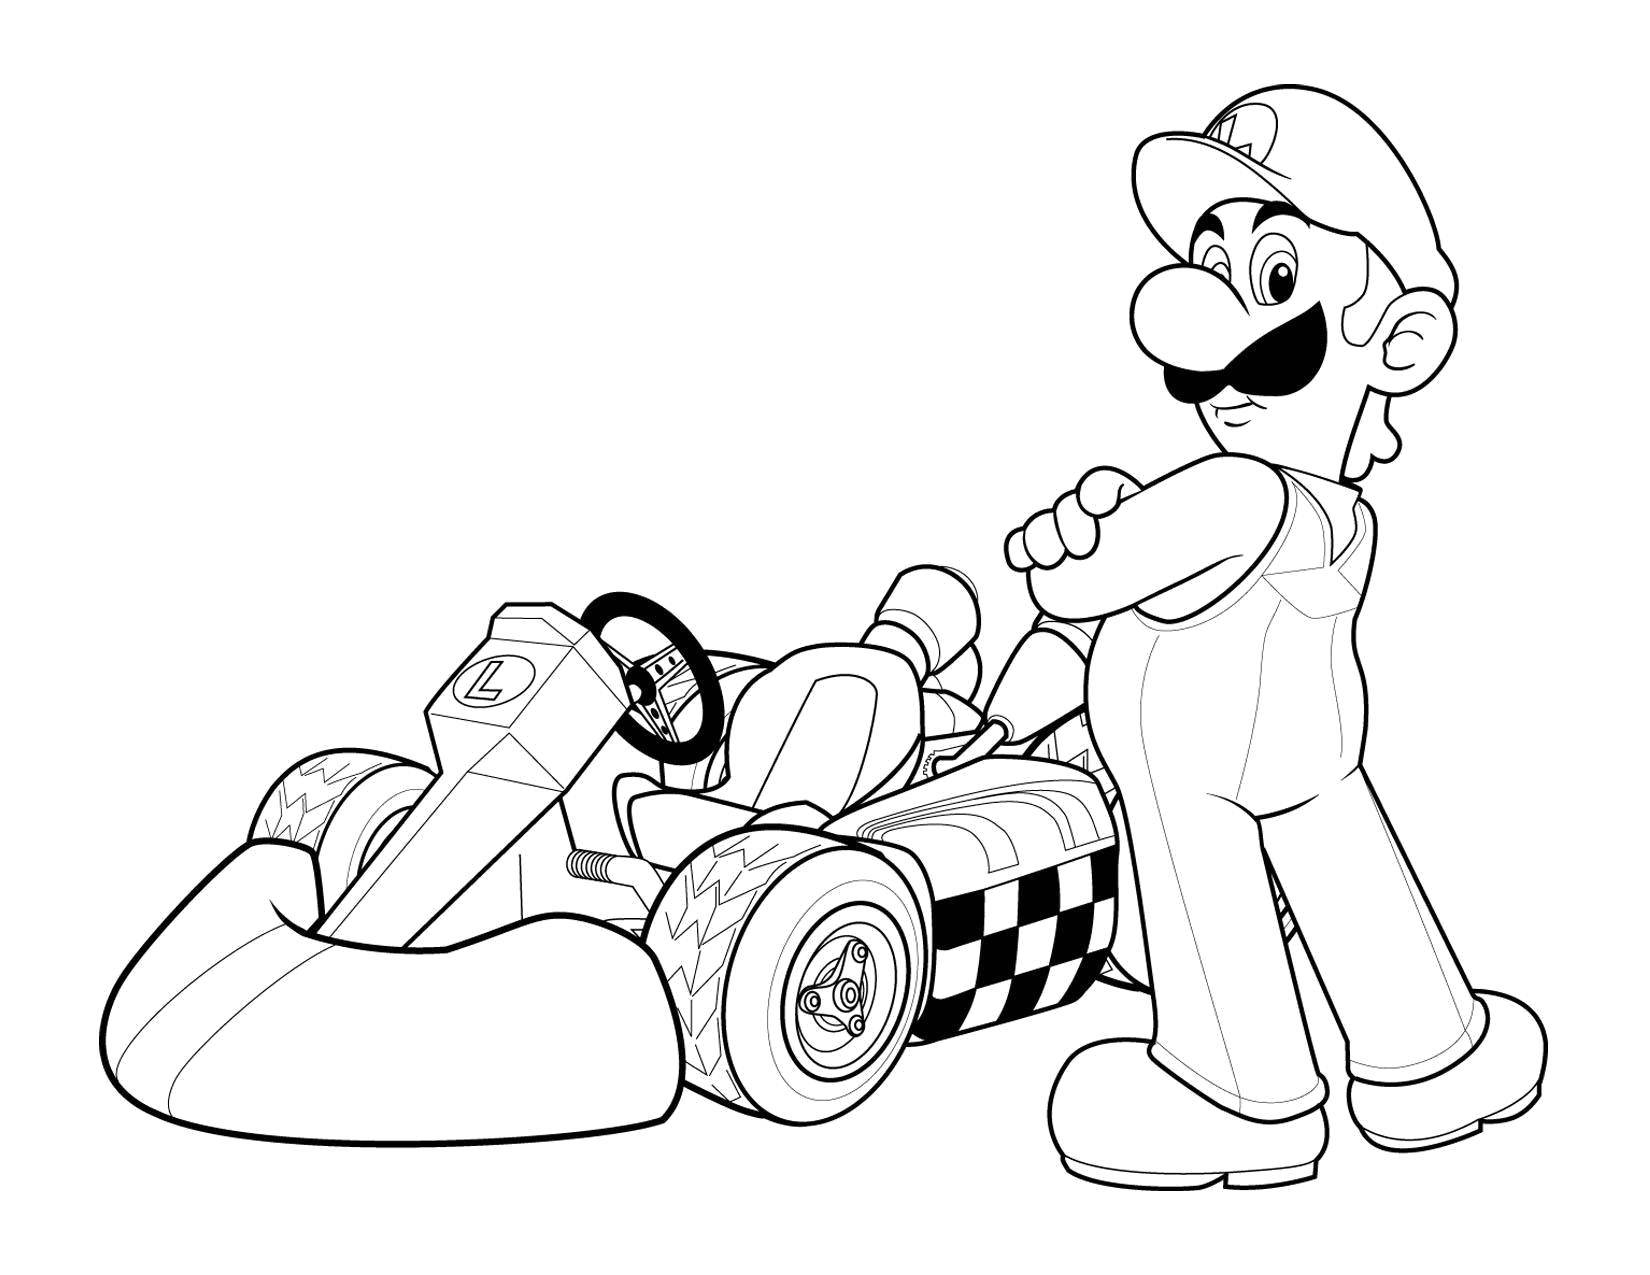 Coloring Luigi. Category Cartoon character. Tags:  Games, Mario.